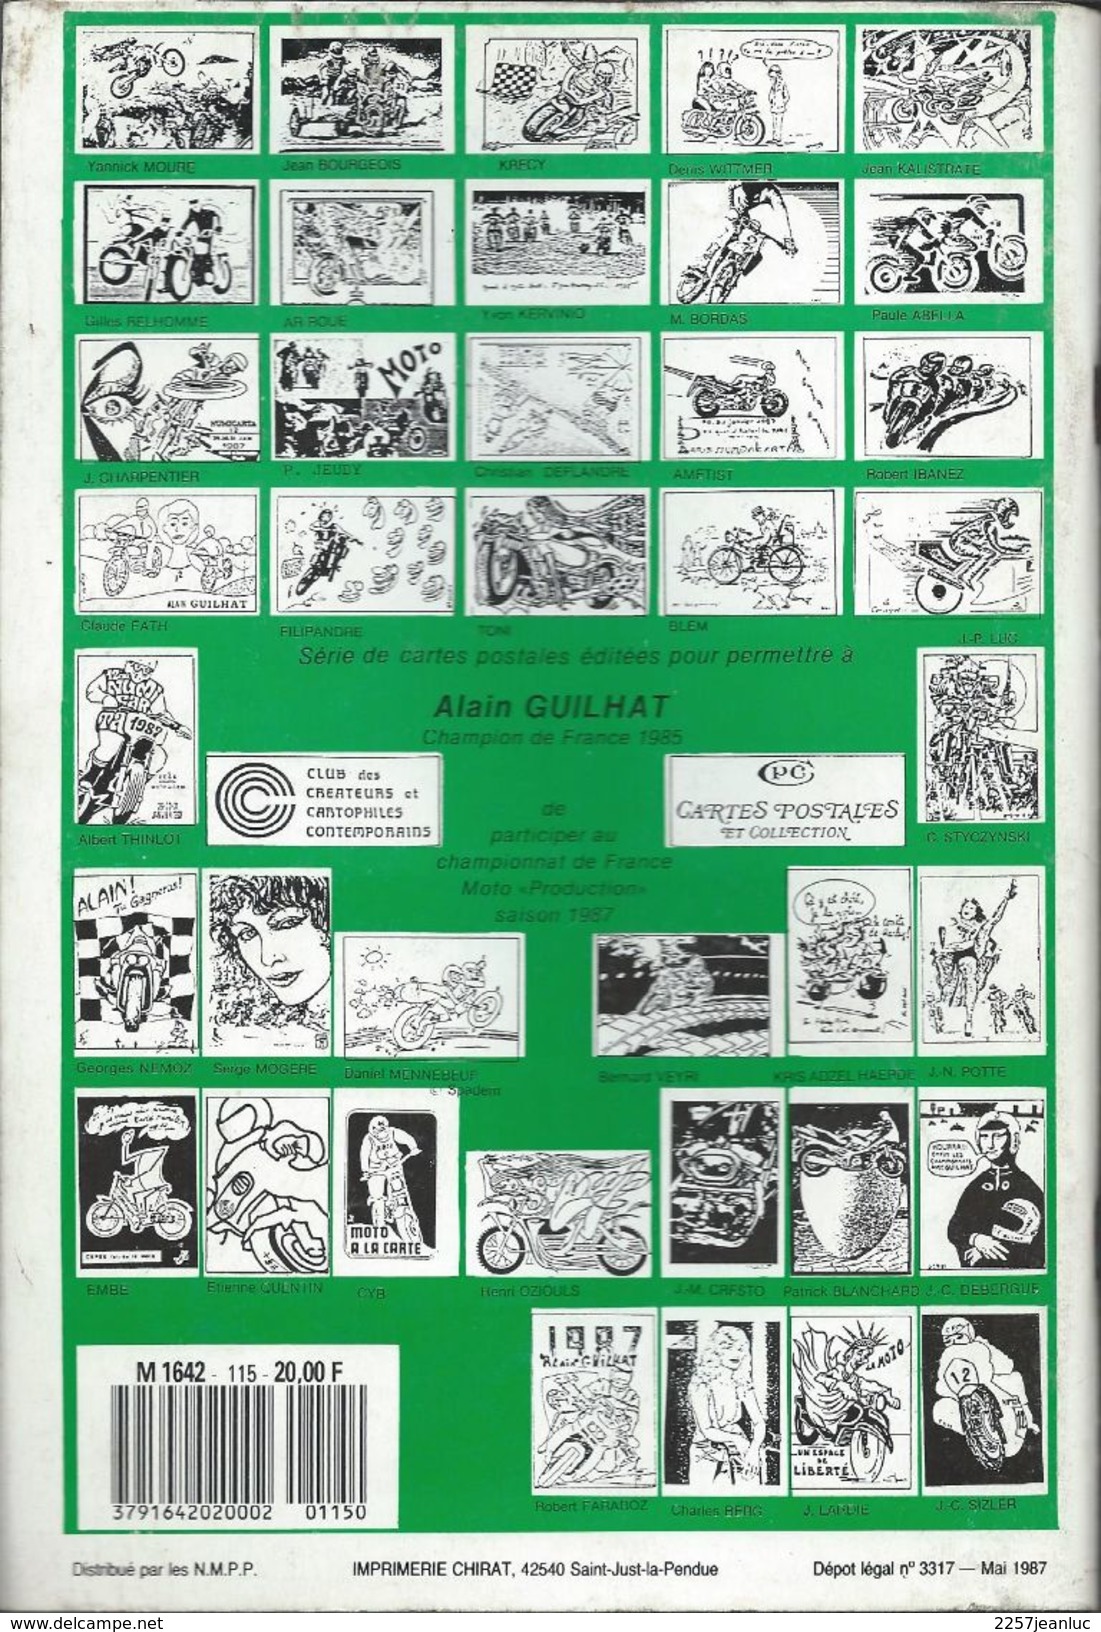 Cartes Postales Et Collections Juin1987  Magazines N: 115 Llustration &  Thèmes Divers 98 Pages - Francese